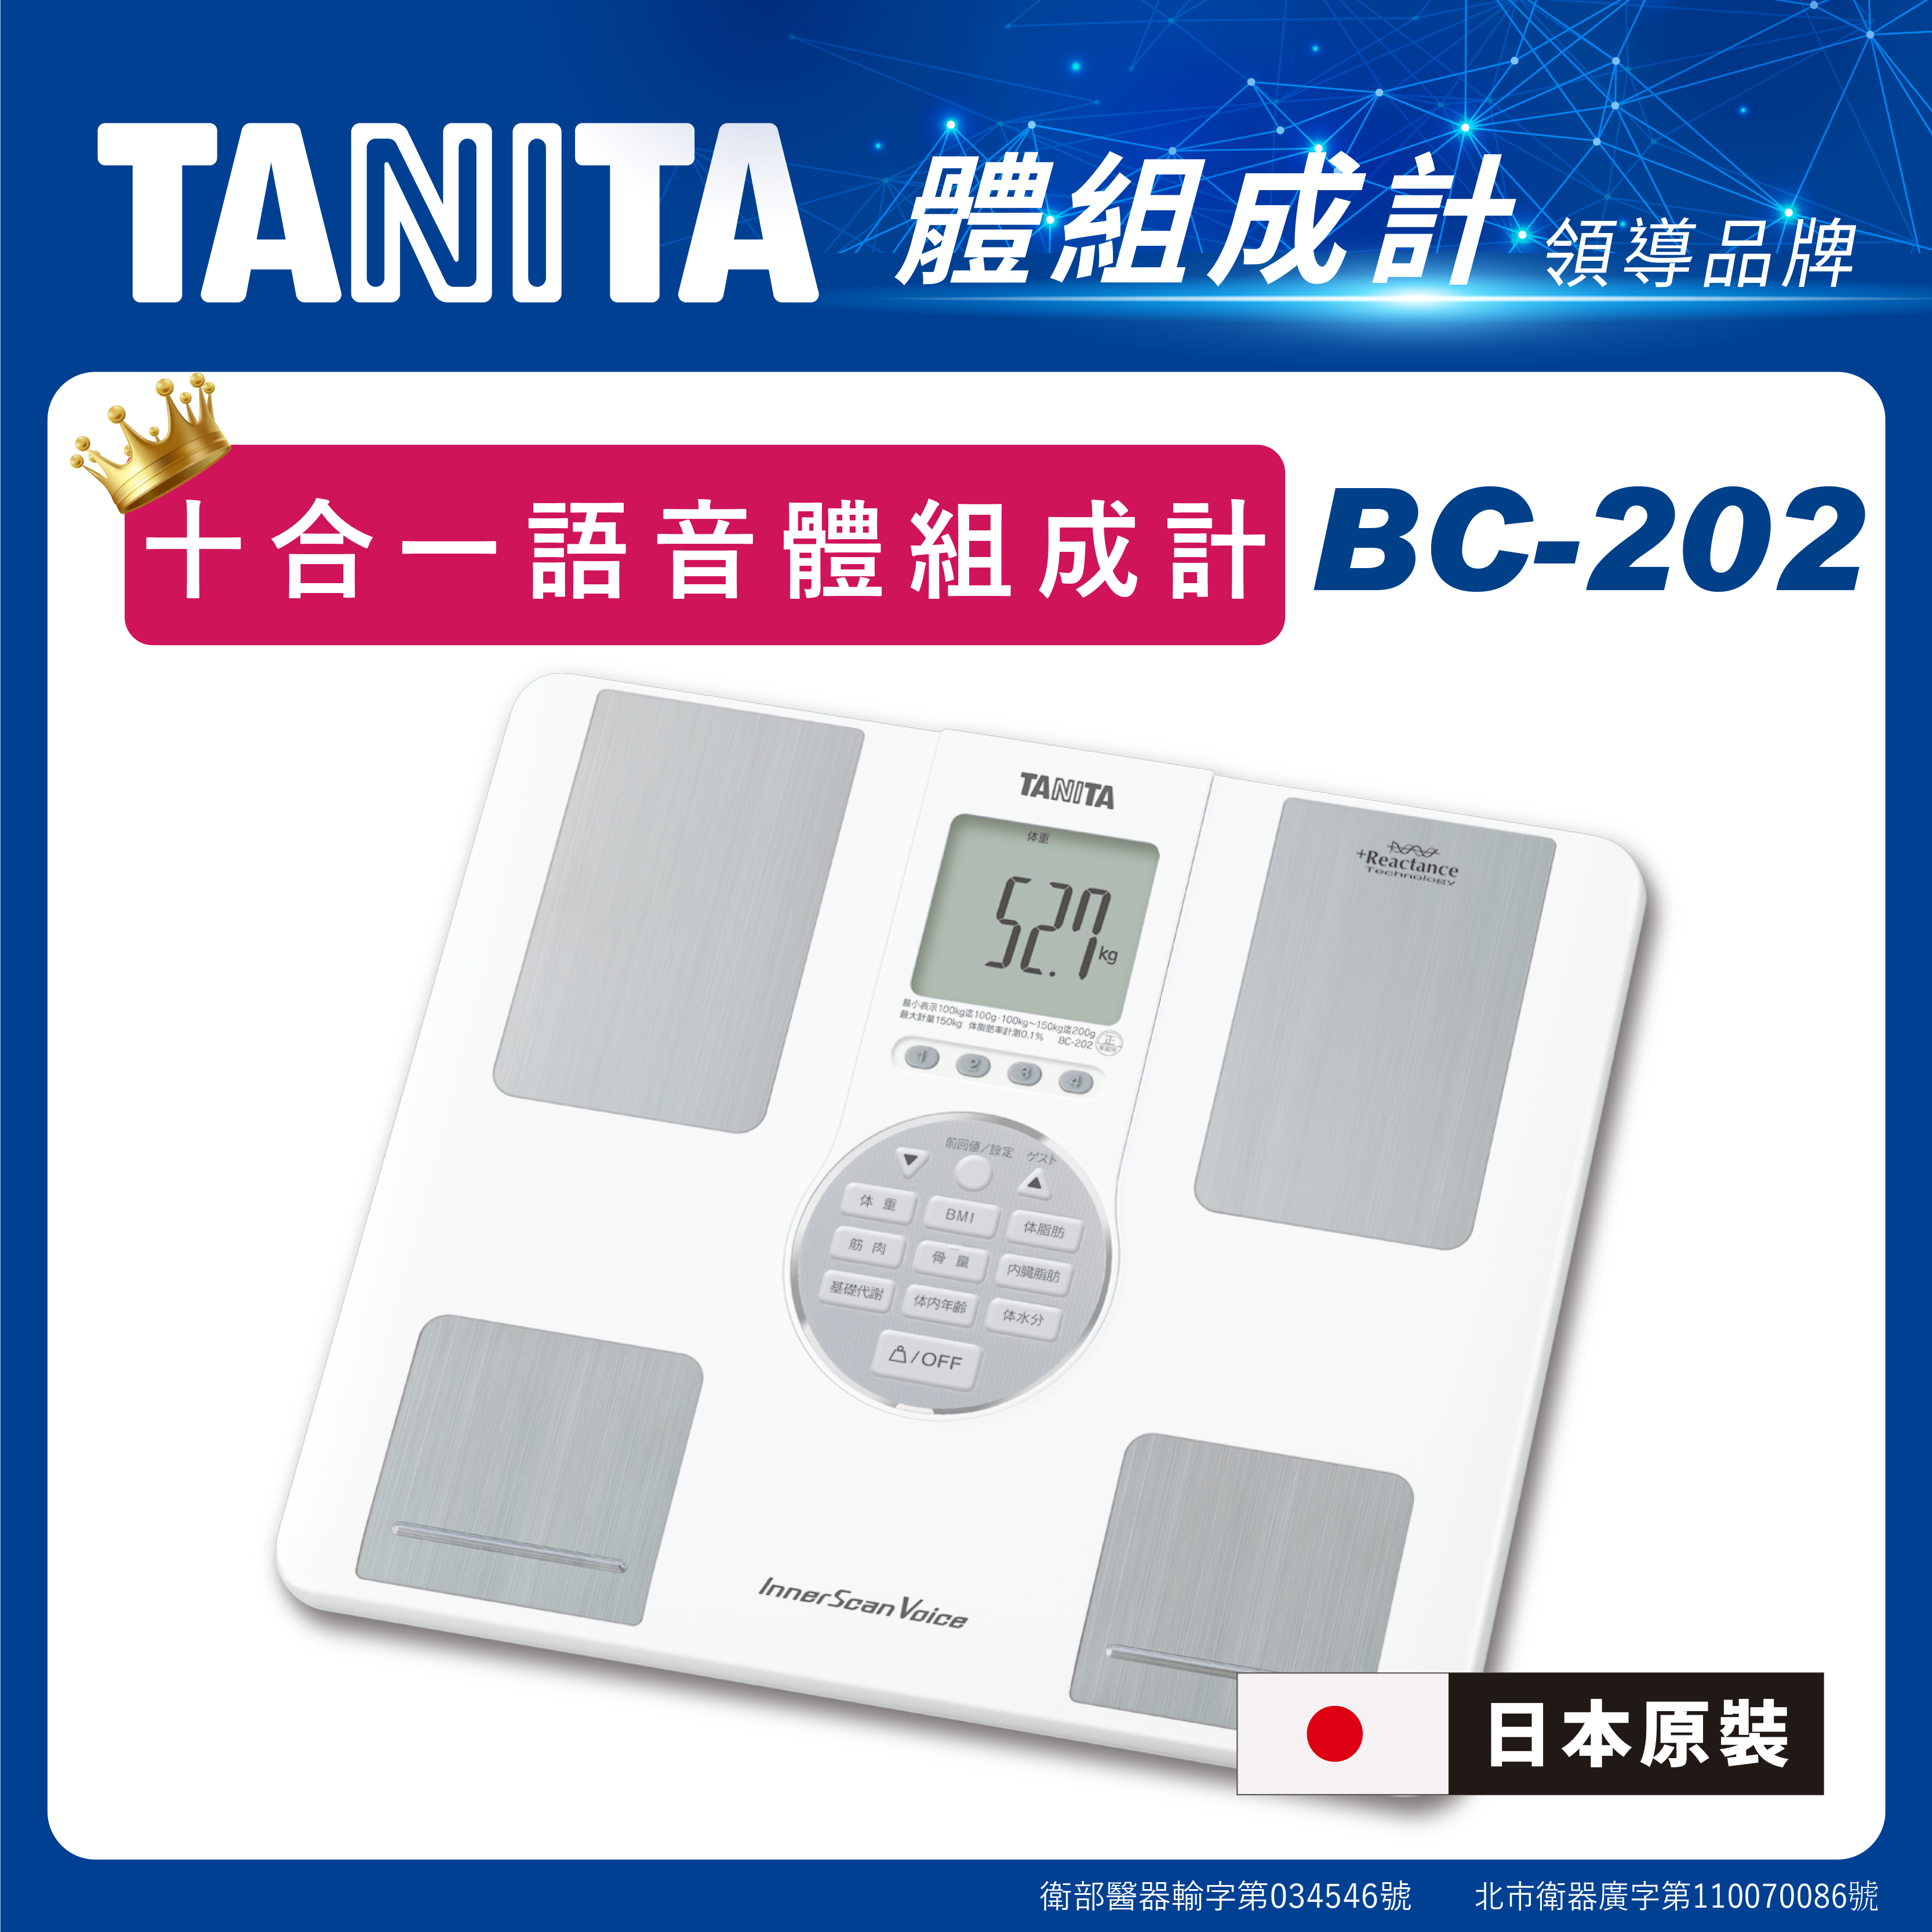 TANITA 十合一語音體組成計BC-202